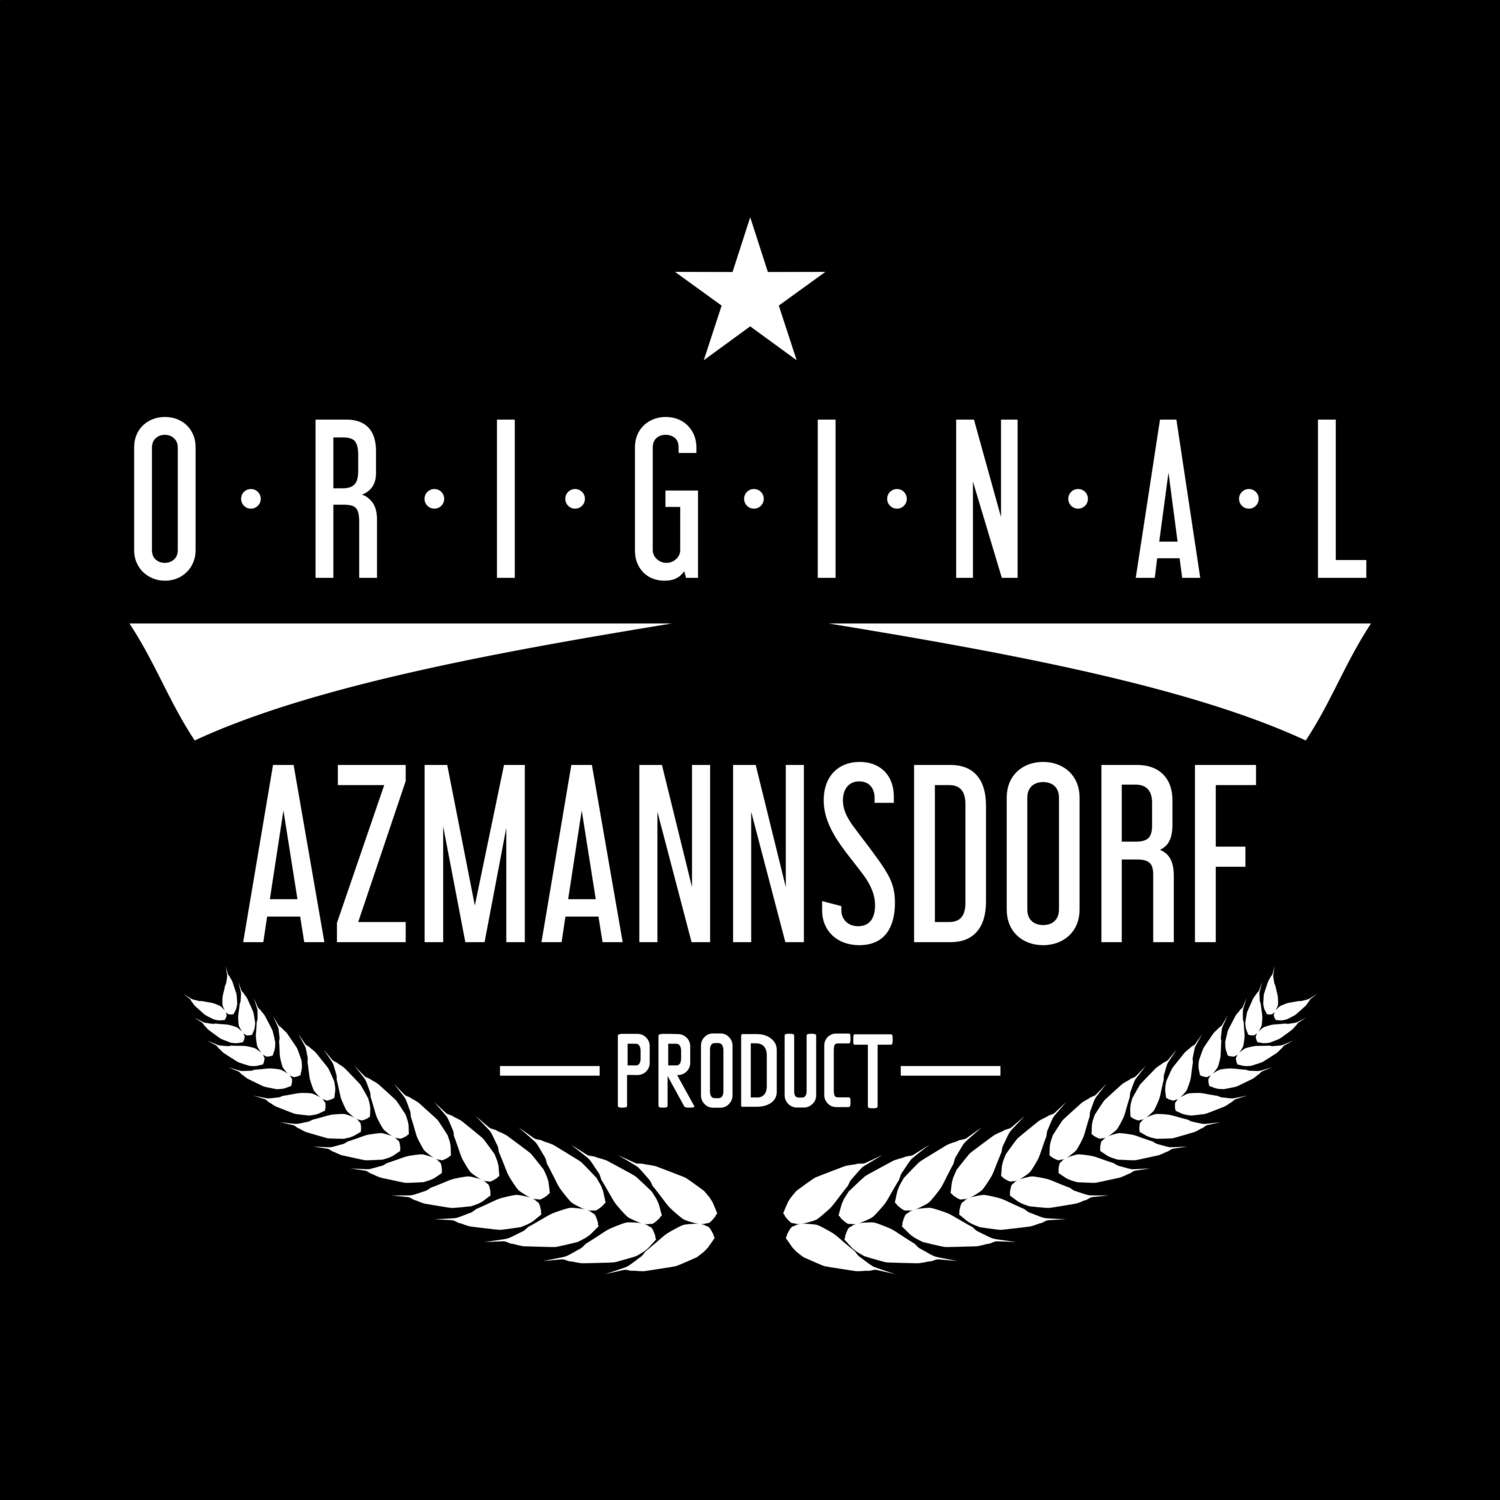 Azmannsdorf T-Shirt »Original Product«